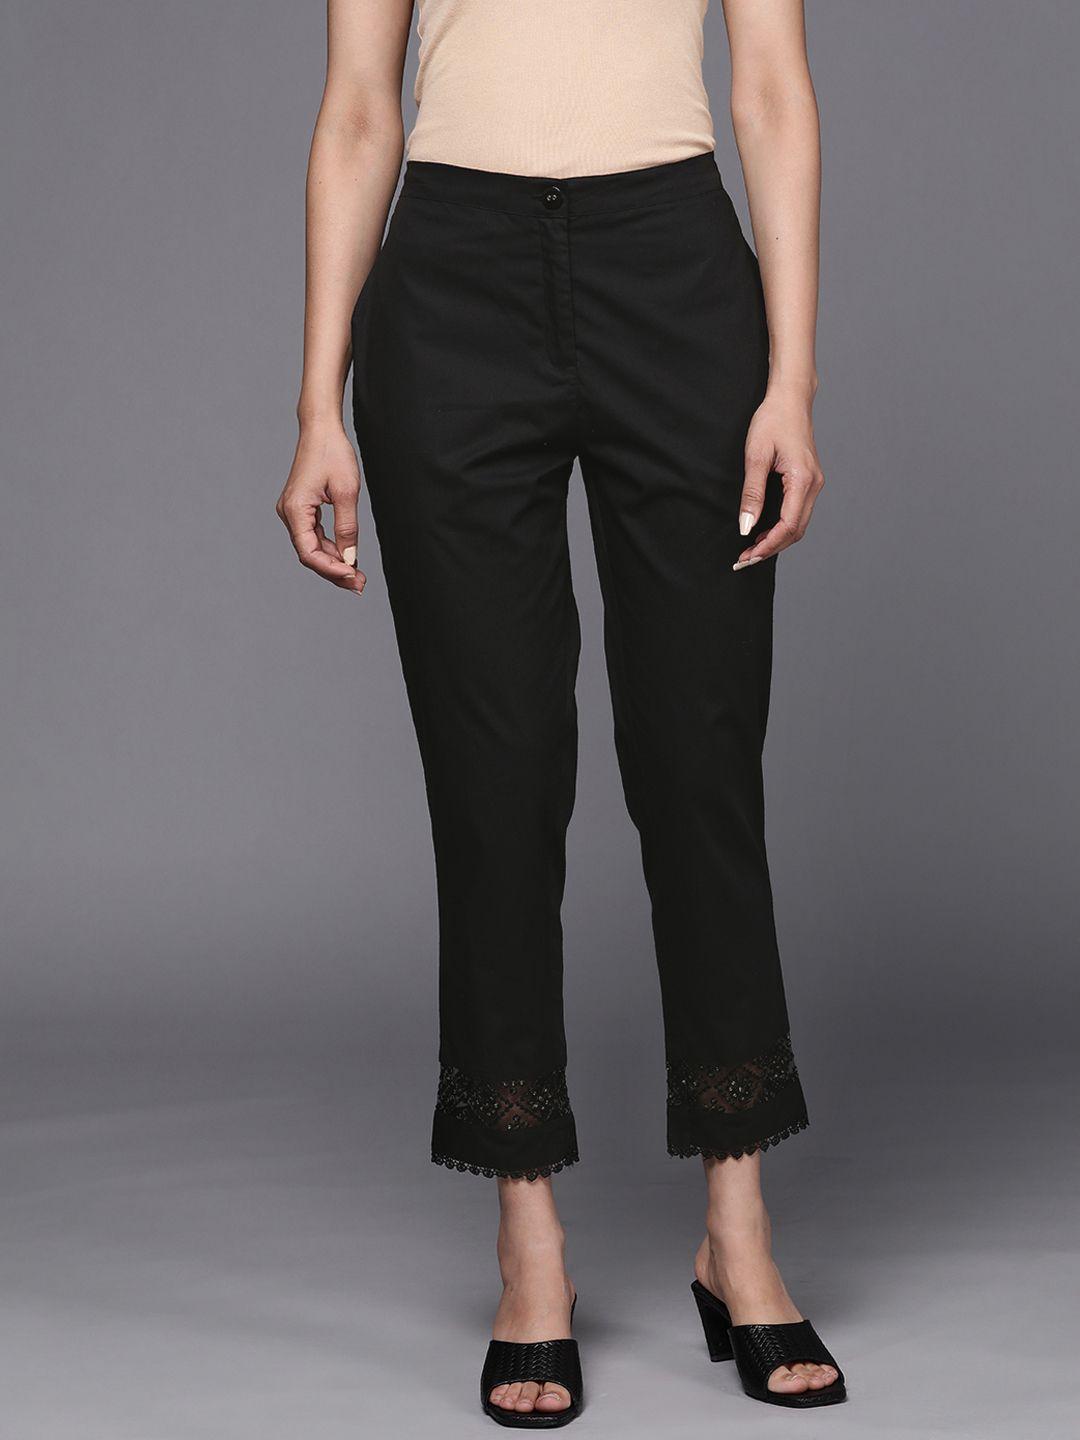 libas women black pure cotton trousers with lace details at hem